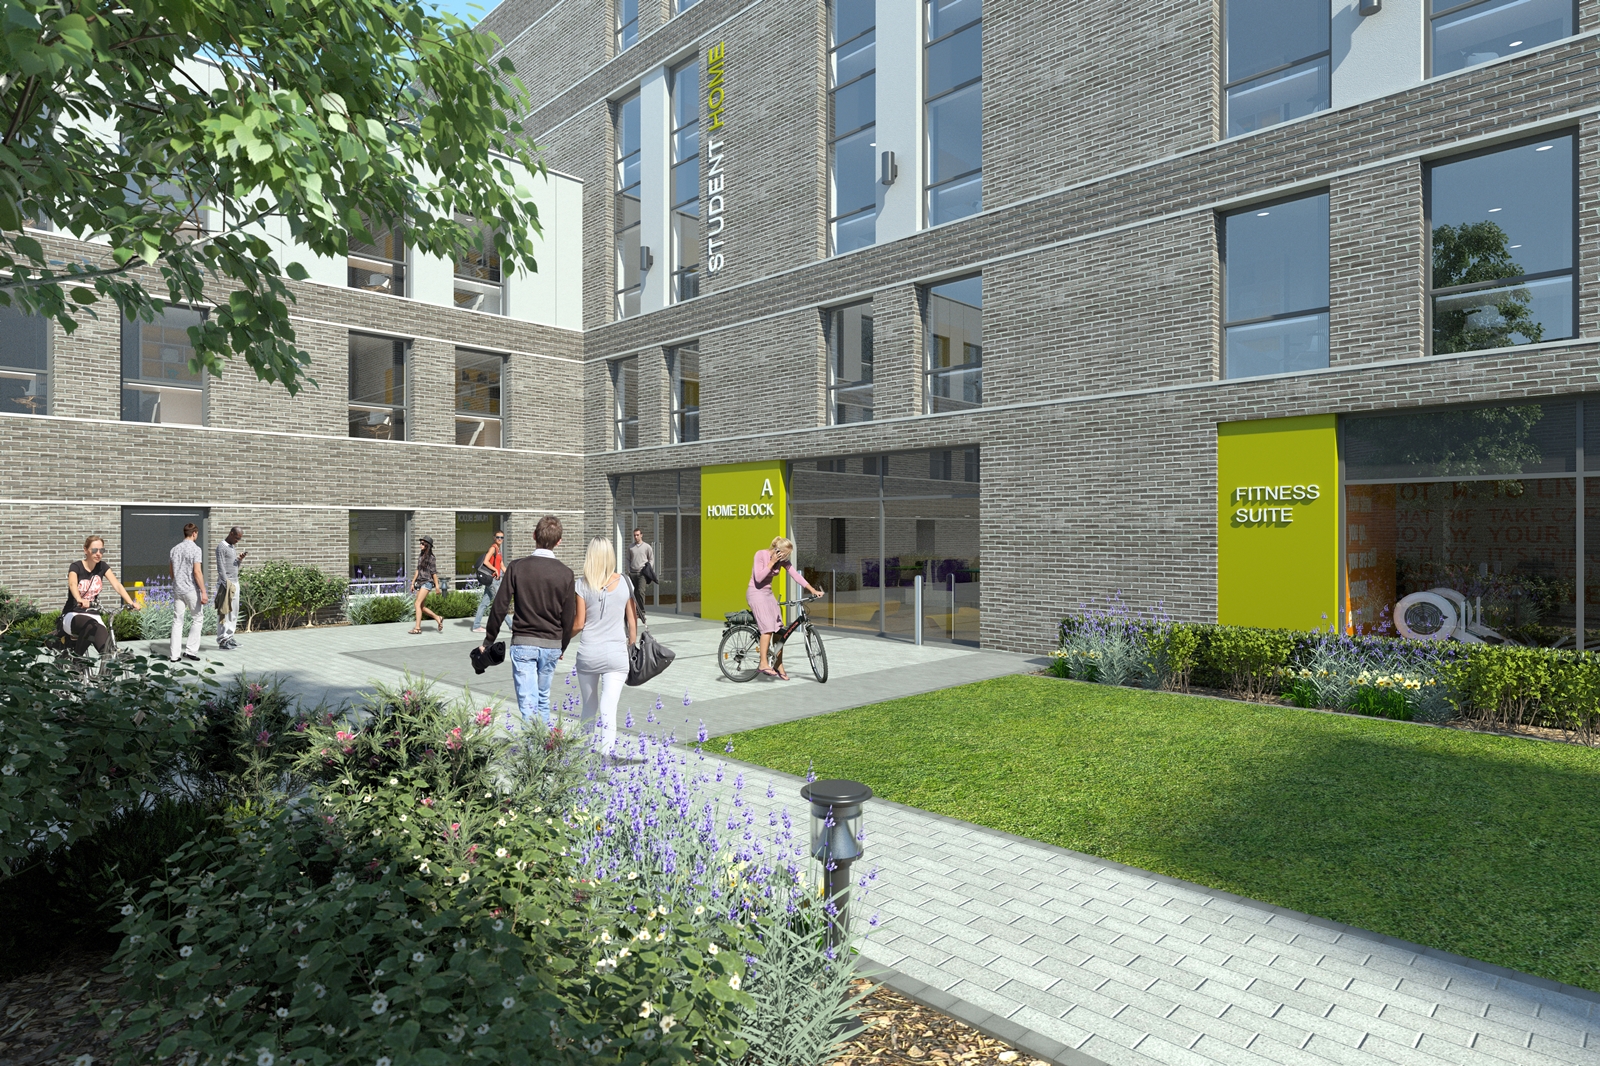 New student accommodation development planned for Edinburgh